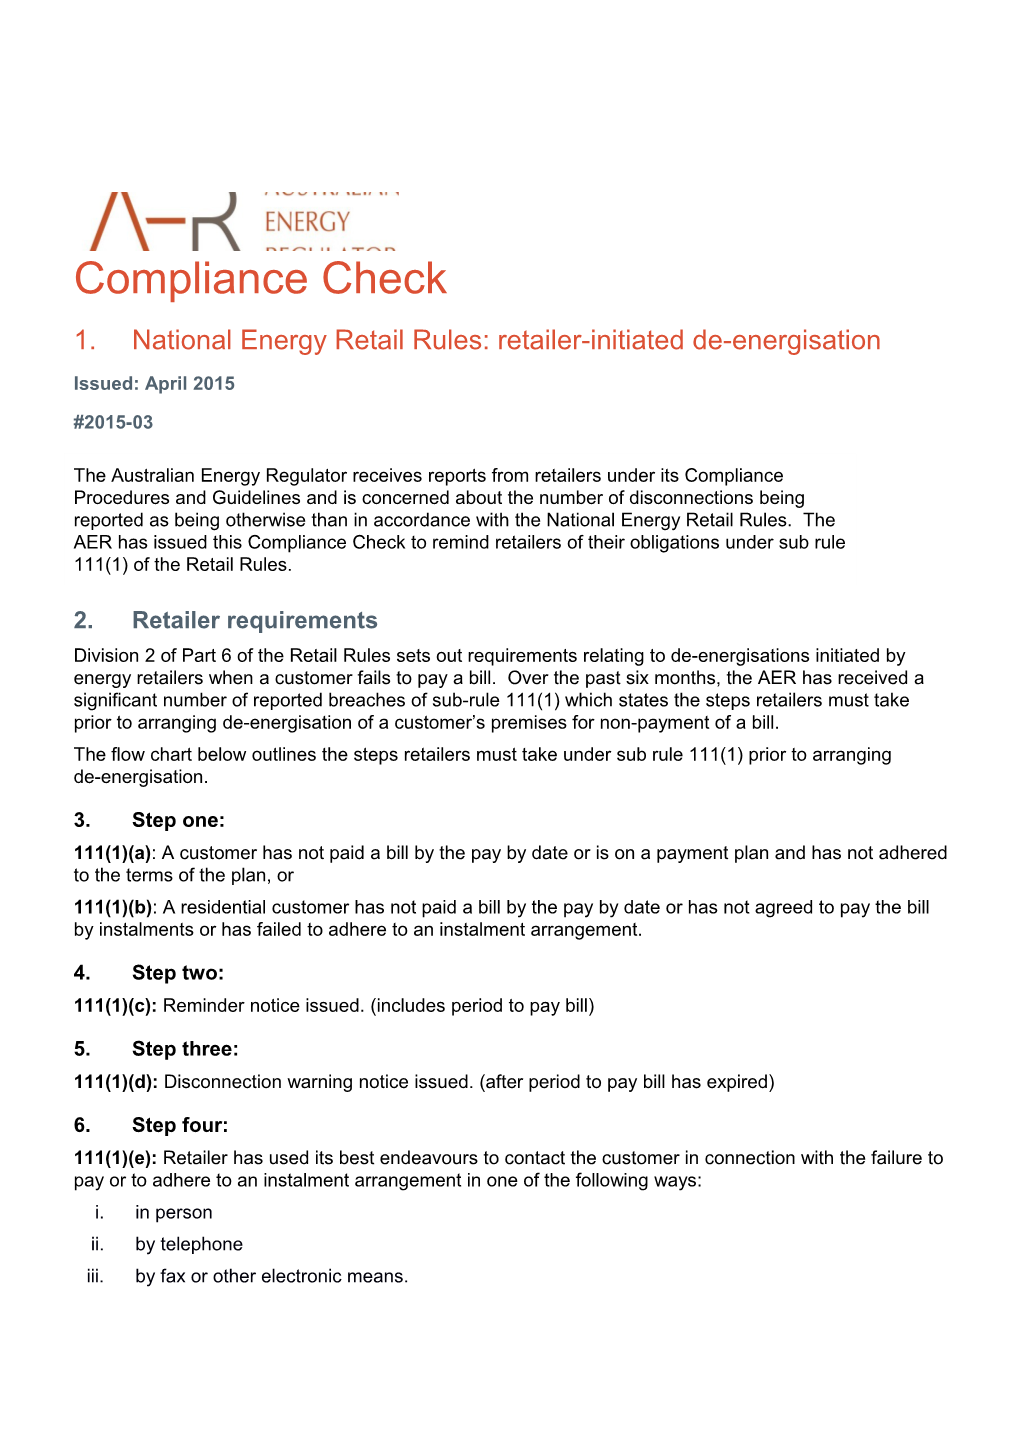 Compliance Check - Retailer Initiated De-Energisation